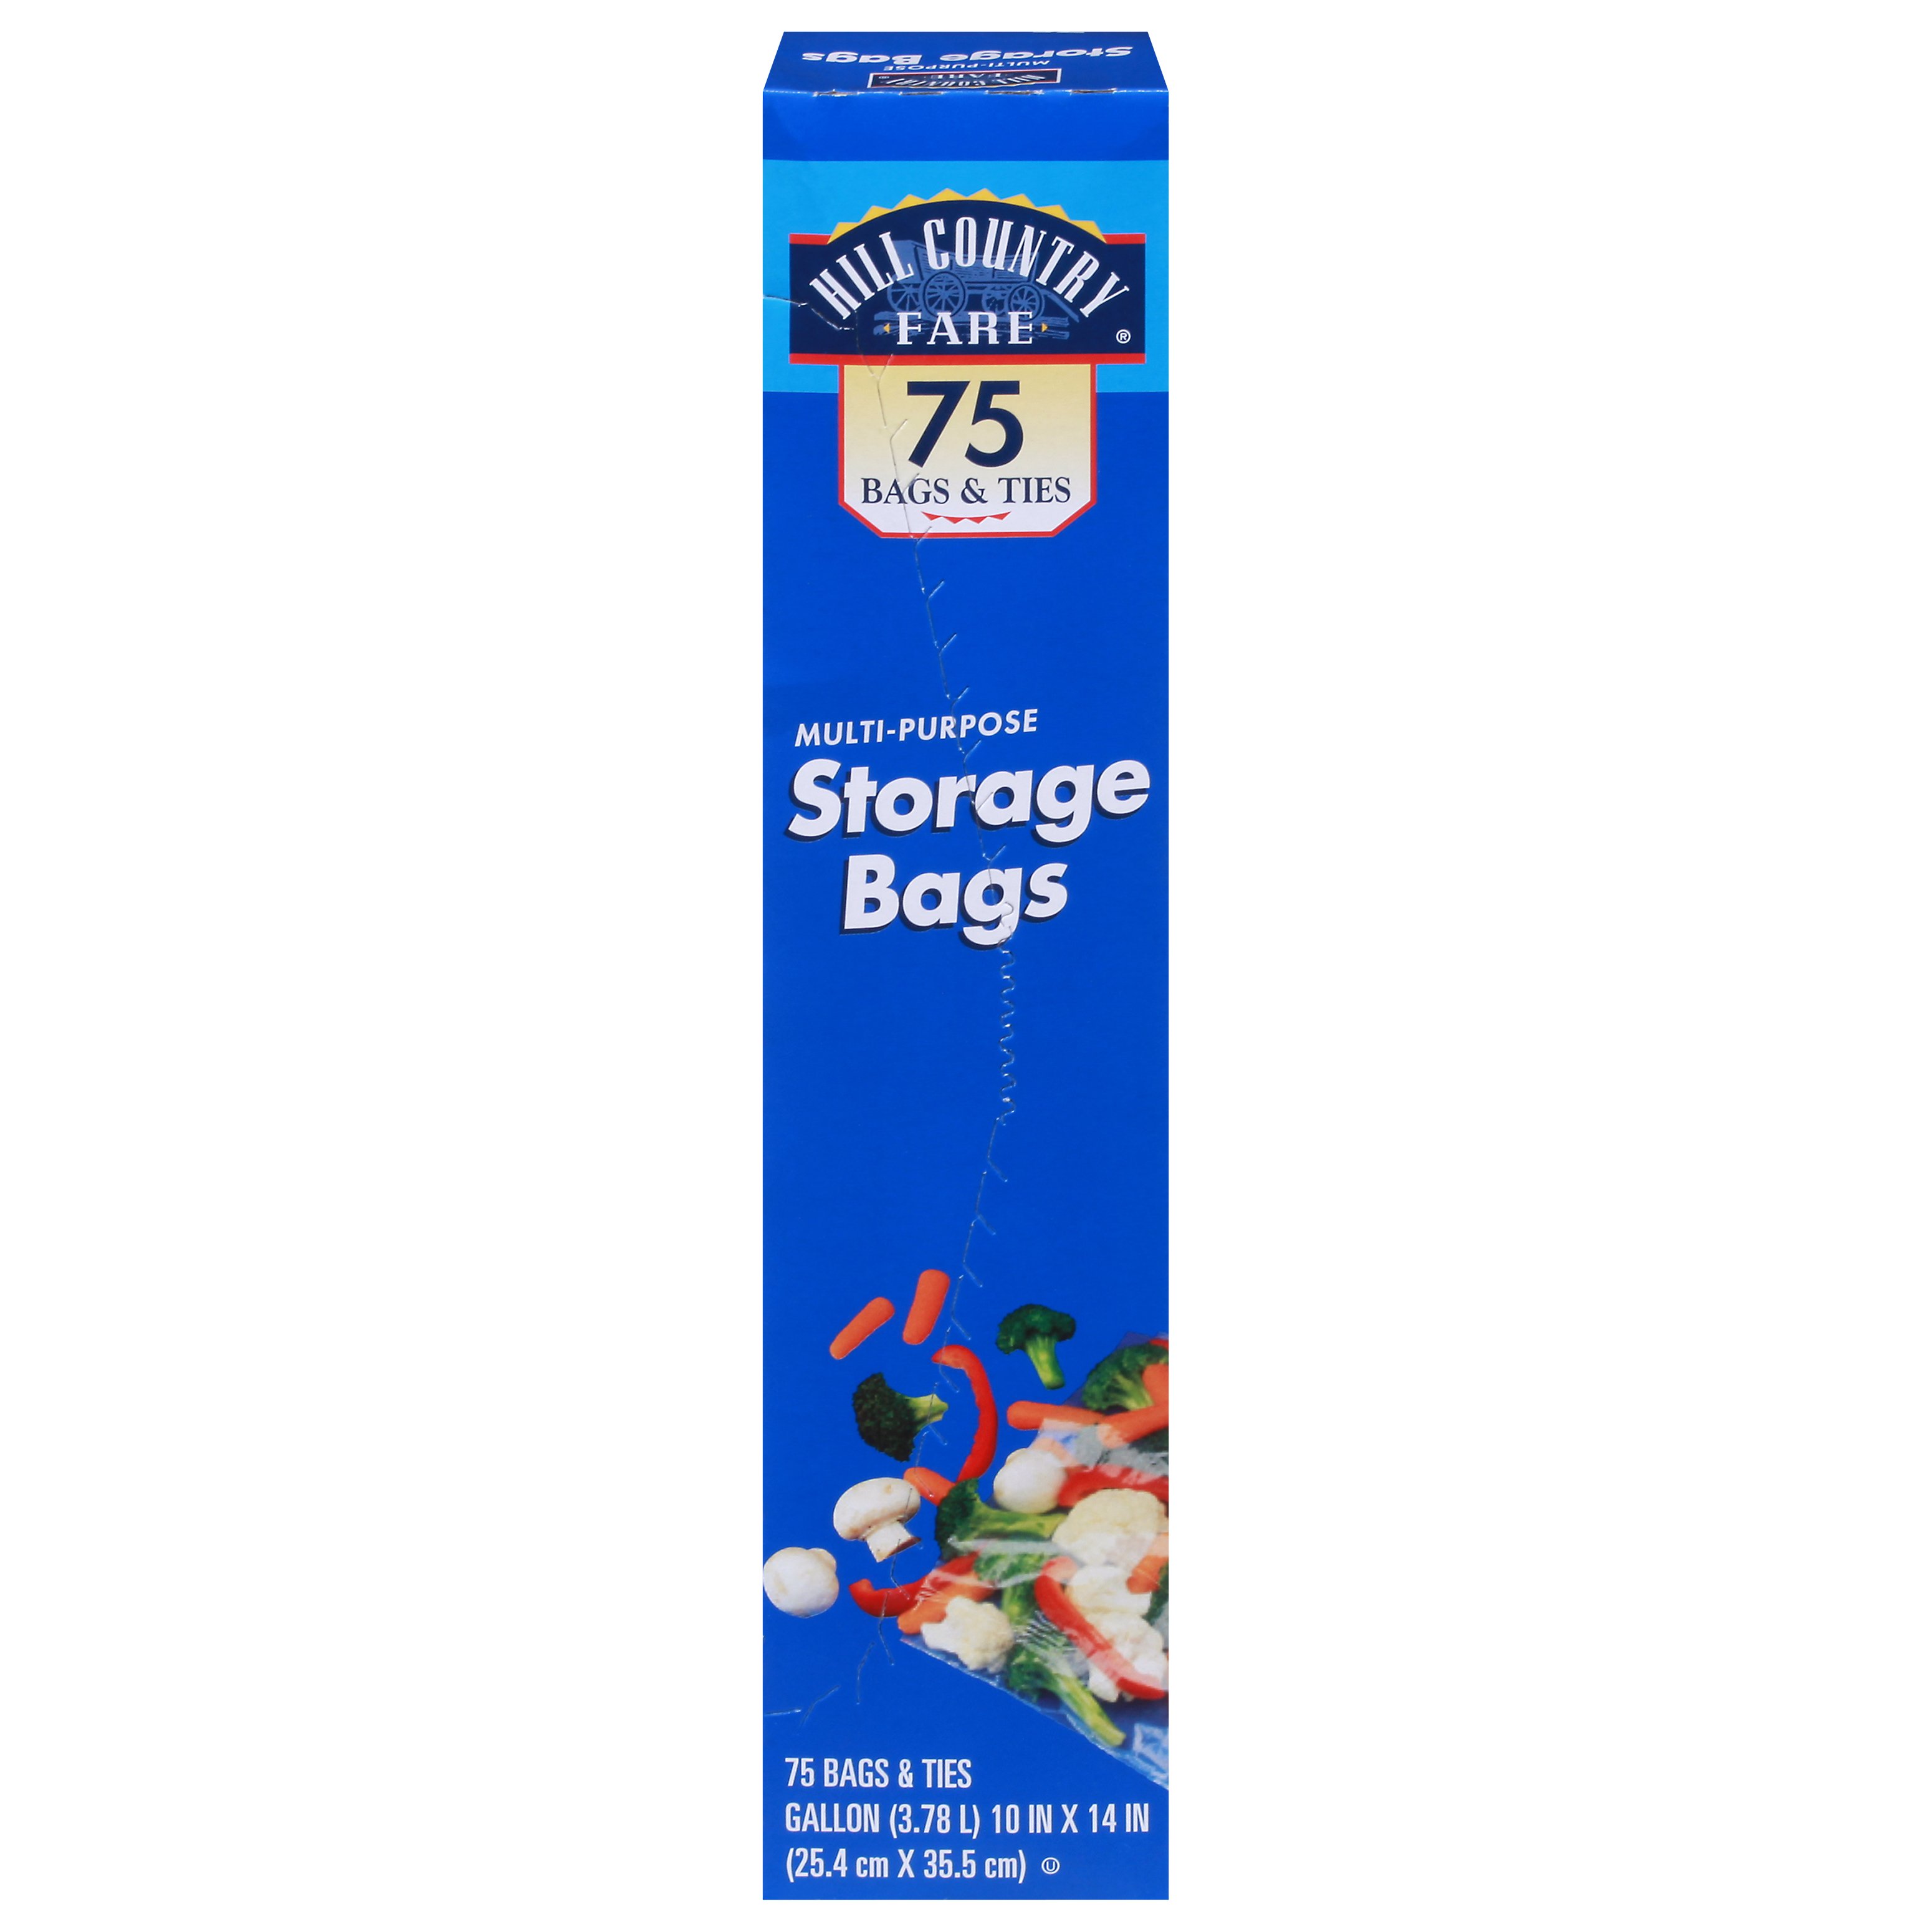 H-E-B Texas Tough Slider Gallon Freezer Bags - Shop Storage Bags at H-E-B